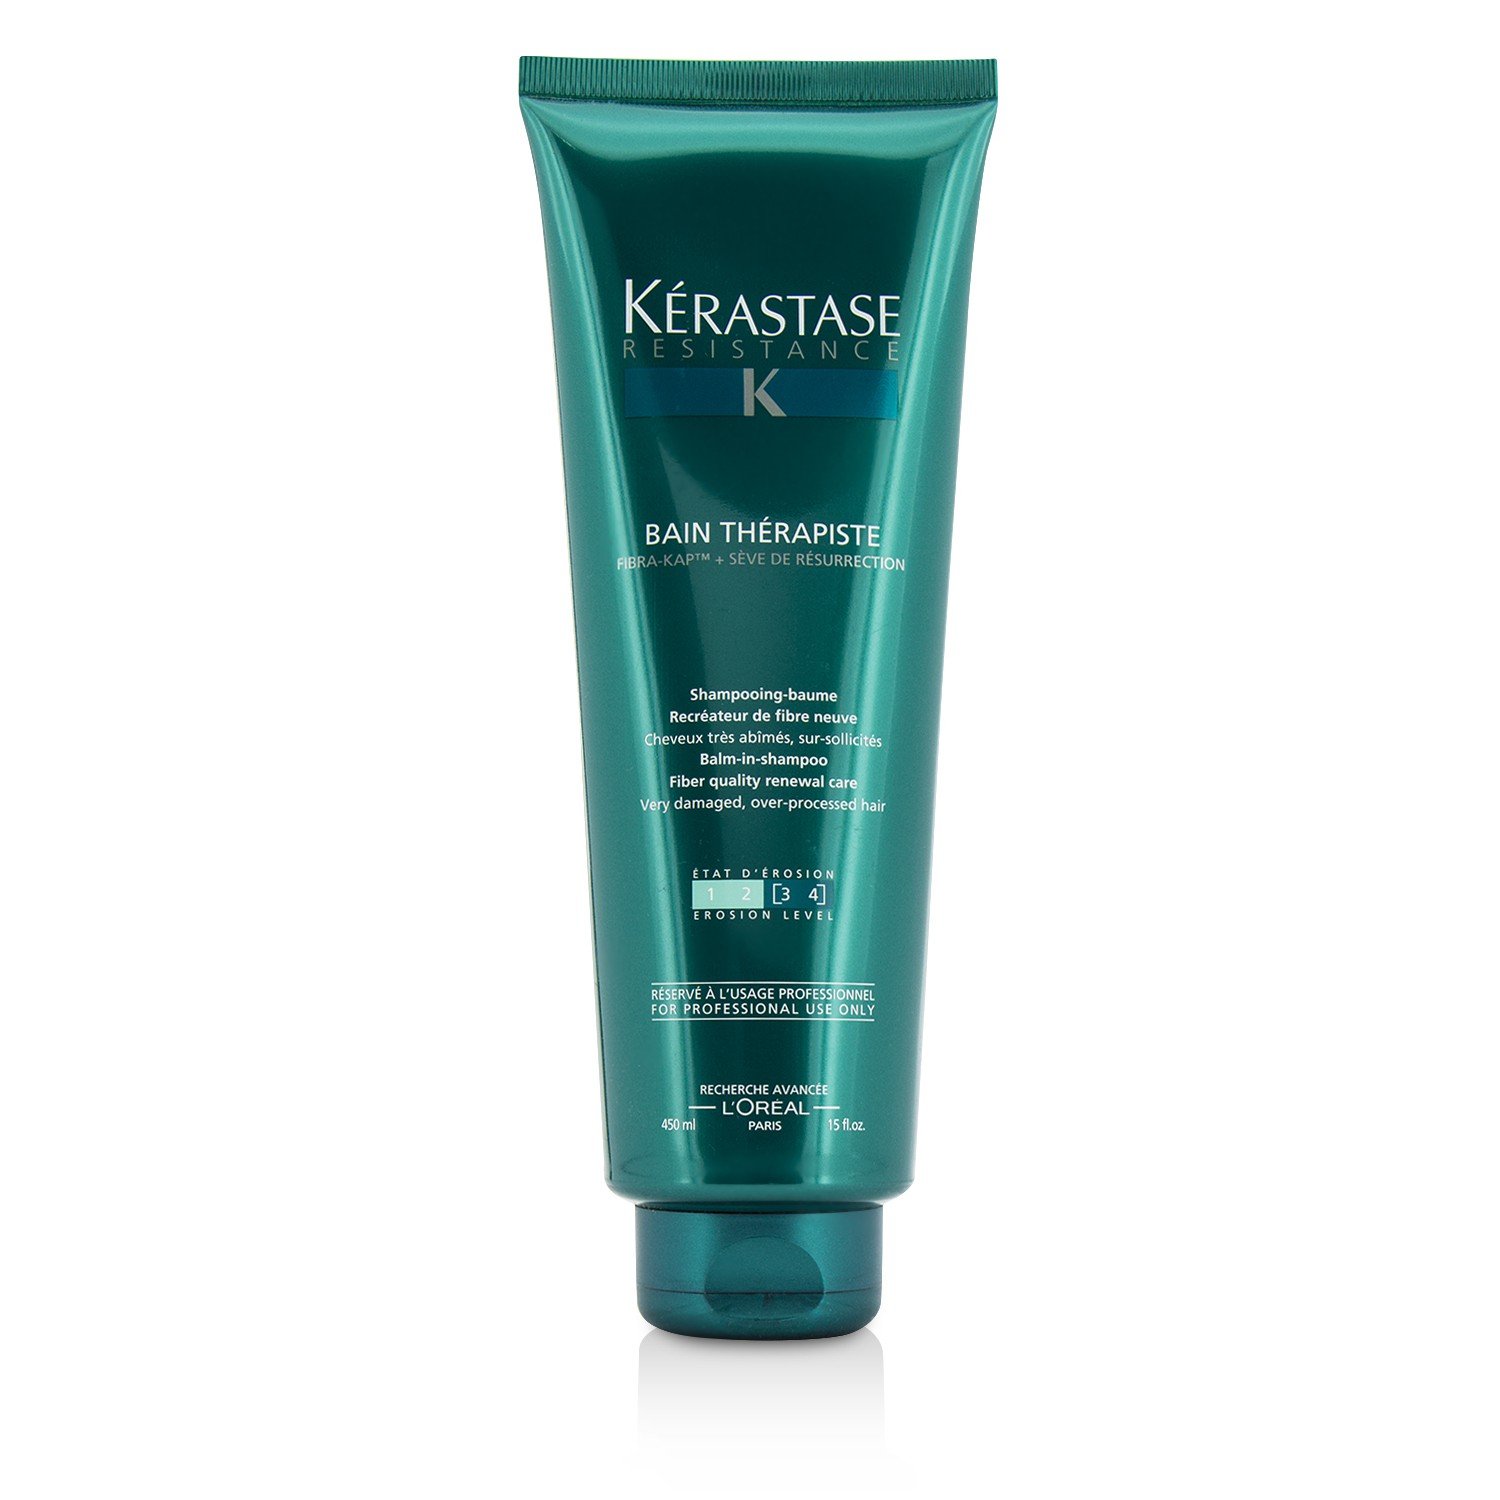 Photos - Hair Product Kerastase Resistance - Bain Therapiste Balm-in-Shampoo Fiber Quality Renew 